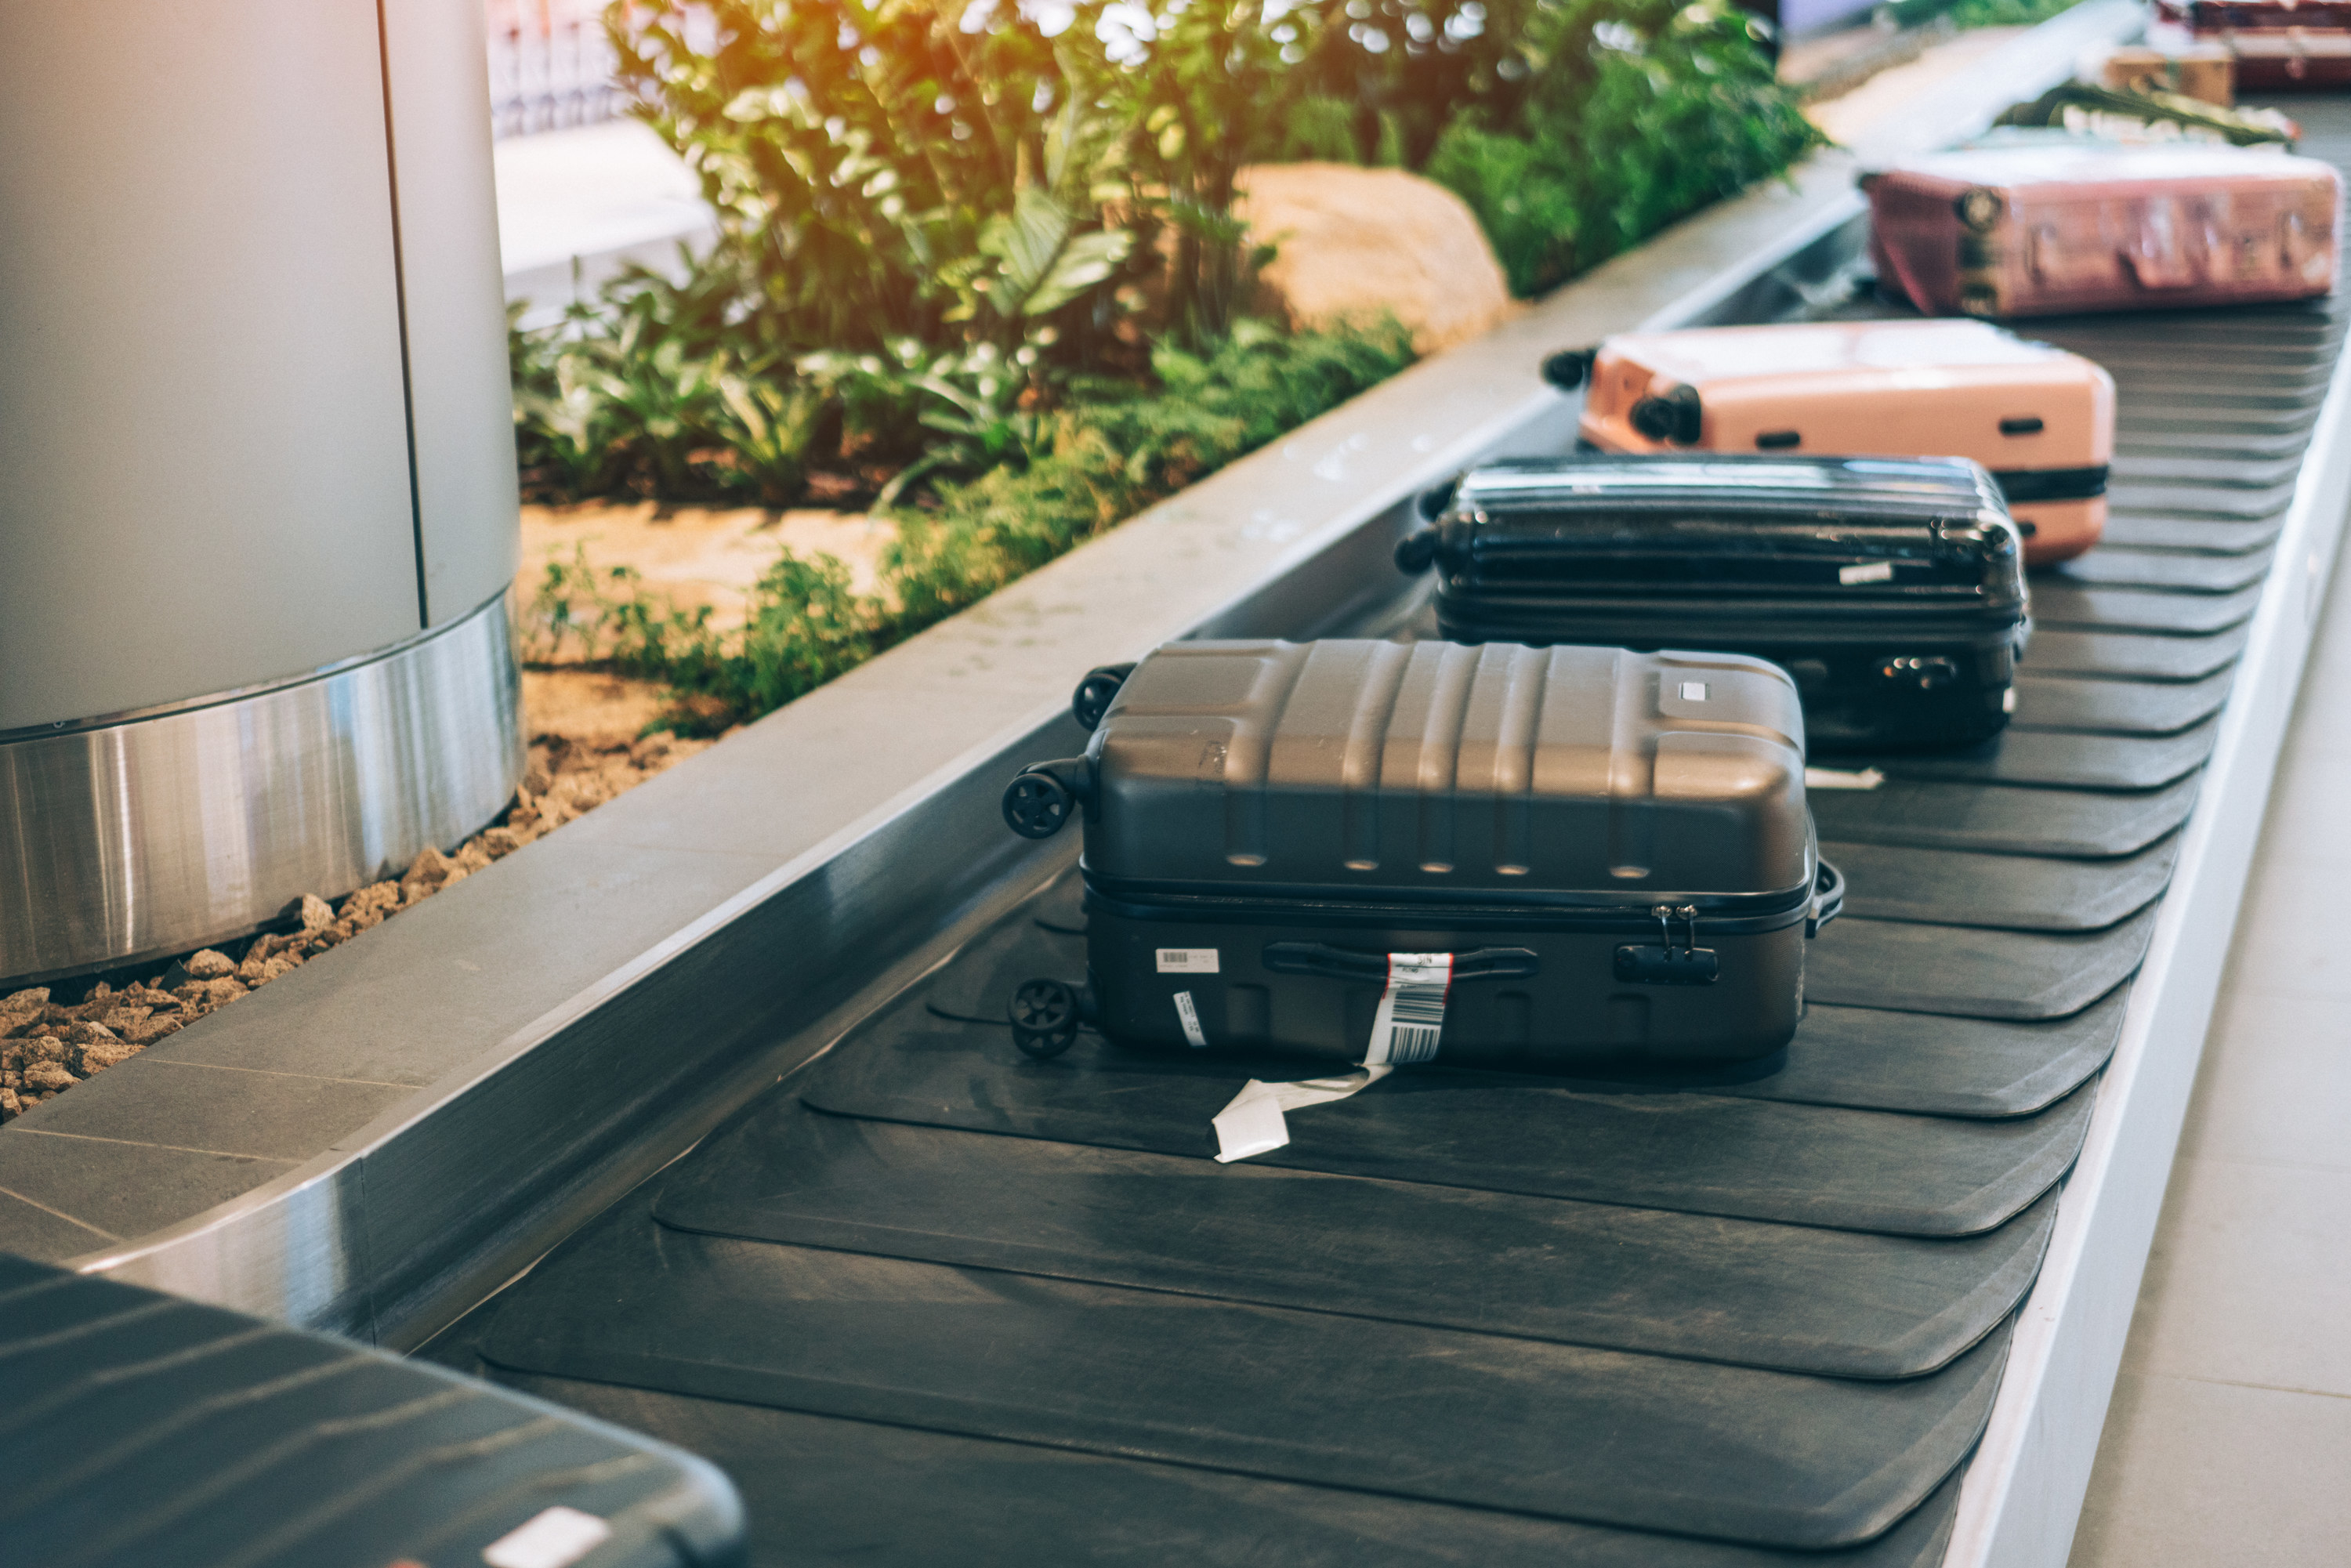 Bags in baggage claim